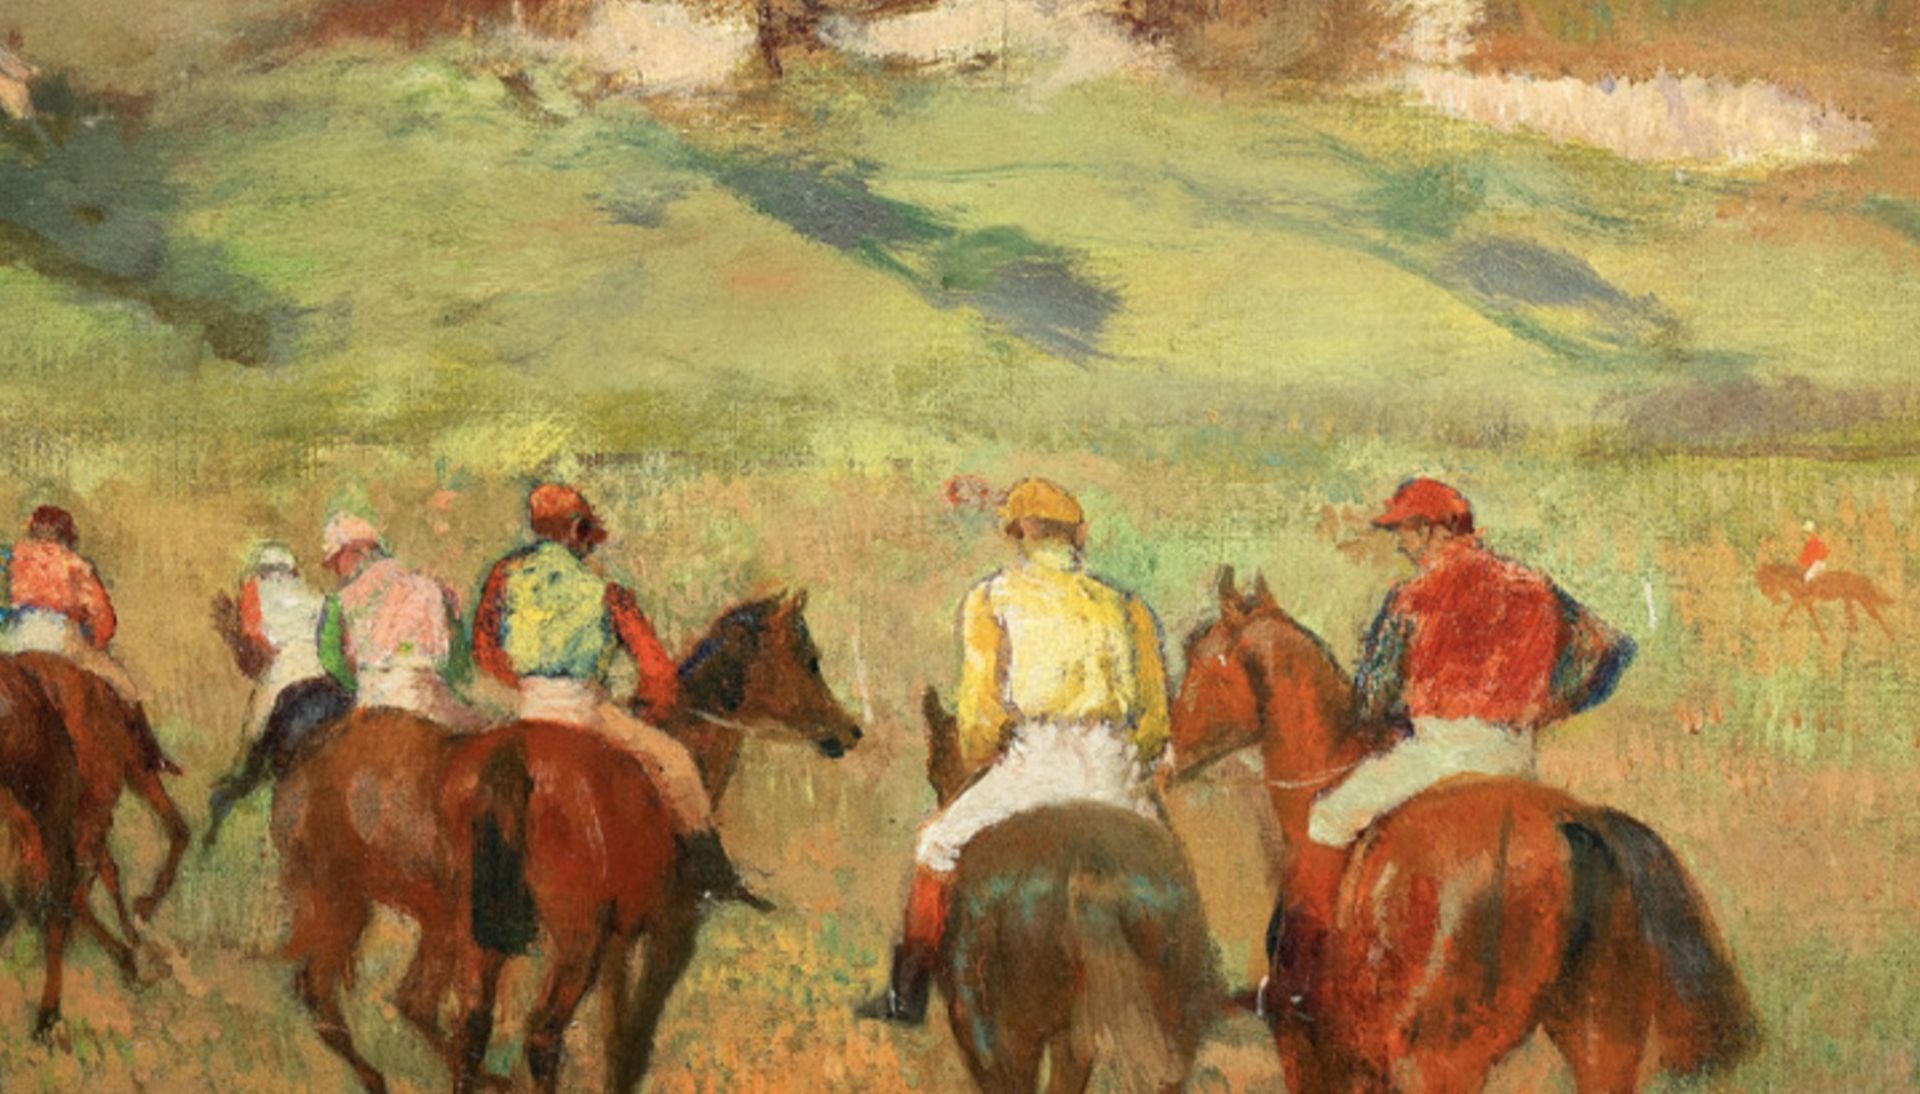 Edgar Degas "Jockeys on Horseback, Distant Hills" Wallpaper - Image 6 of 6